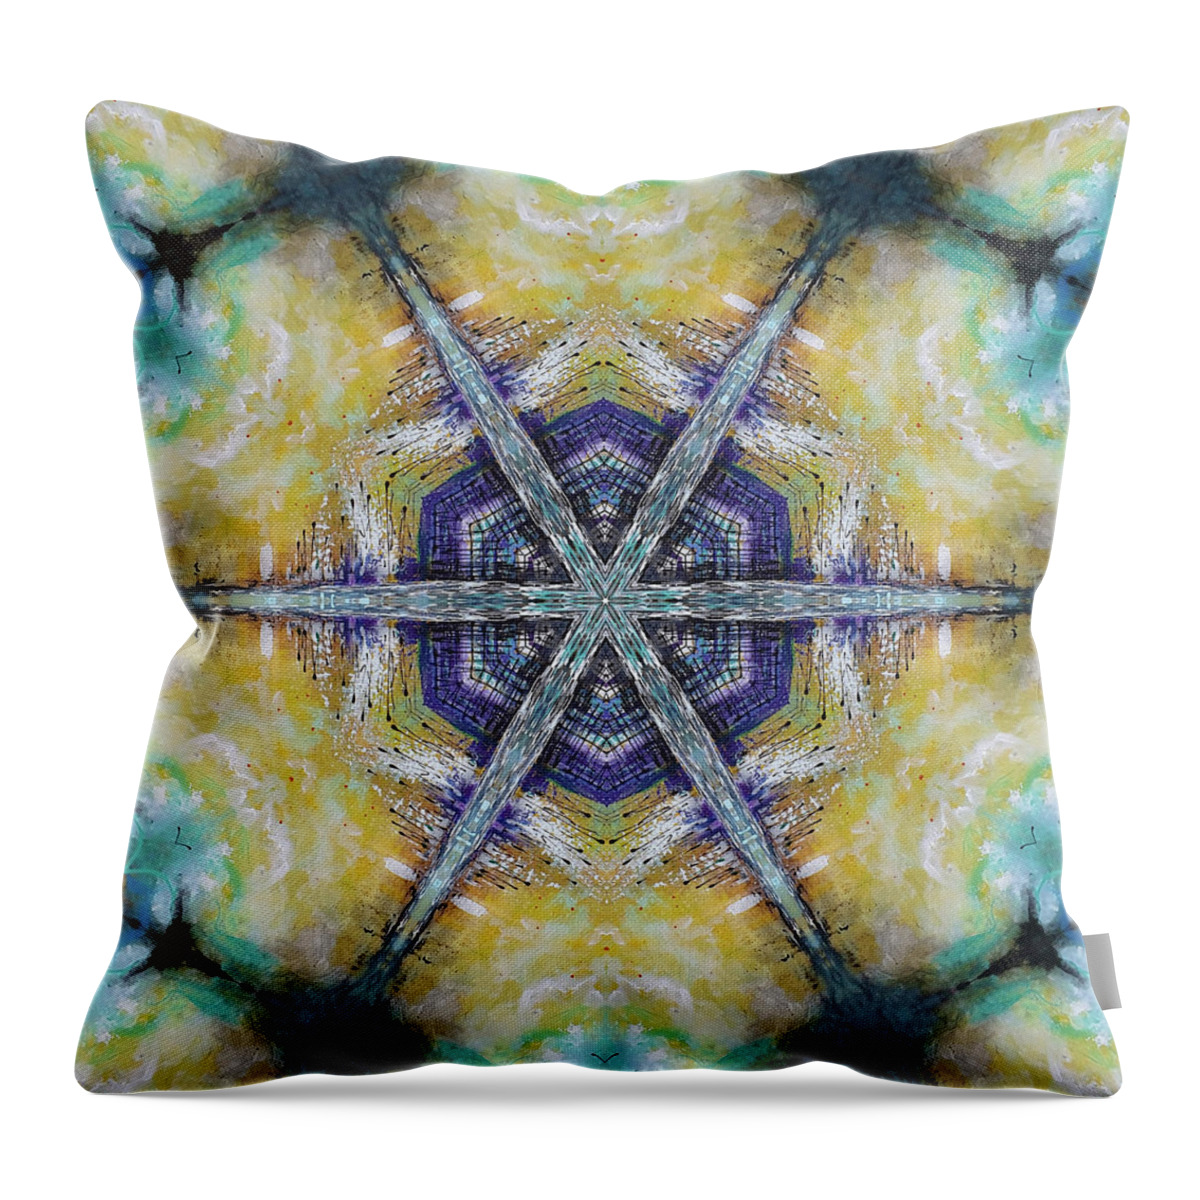 Digital Art Throw Pillow featuring the digital art Intercession - Kaleidoscope by Themayart